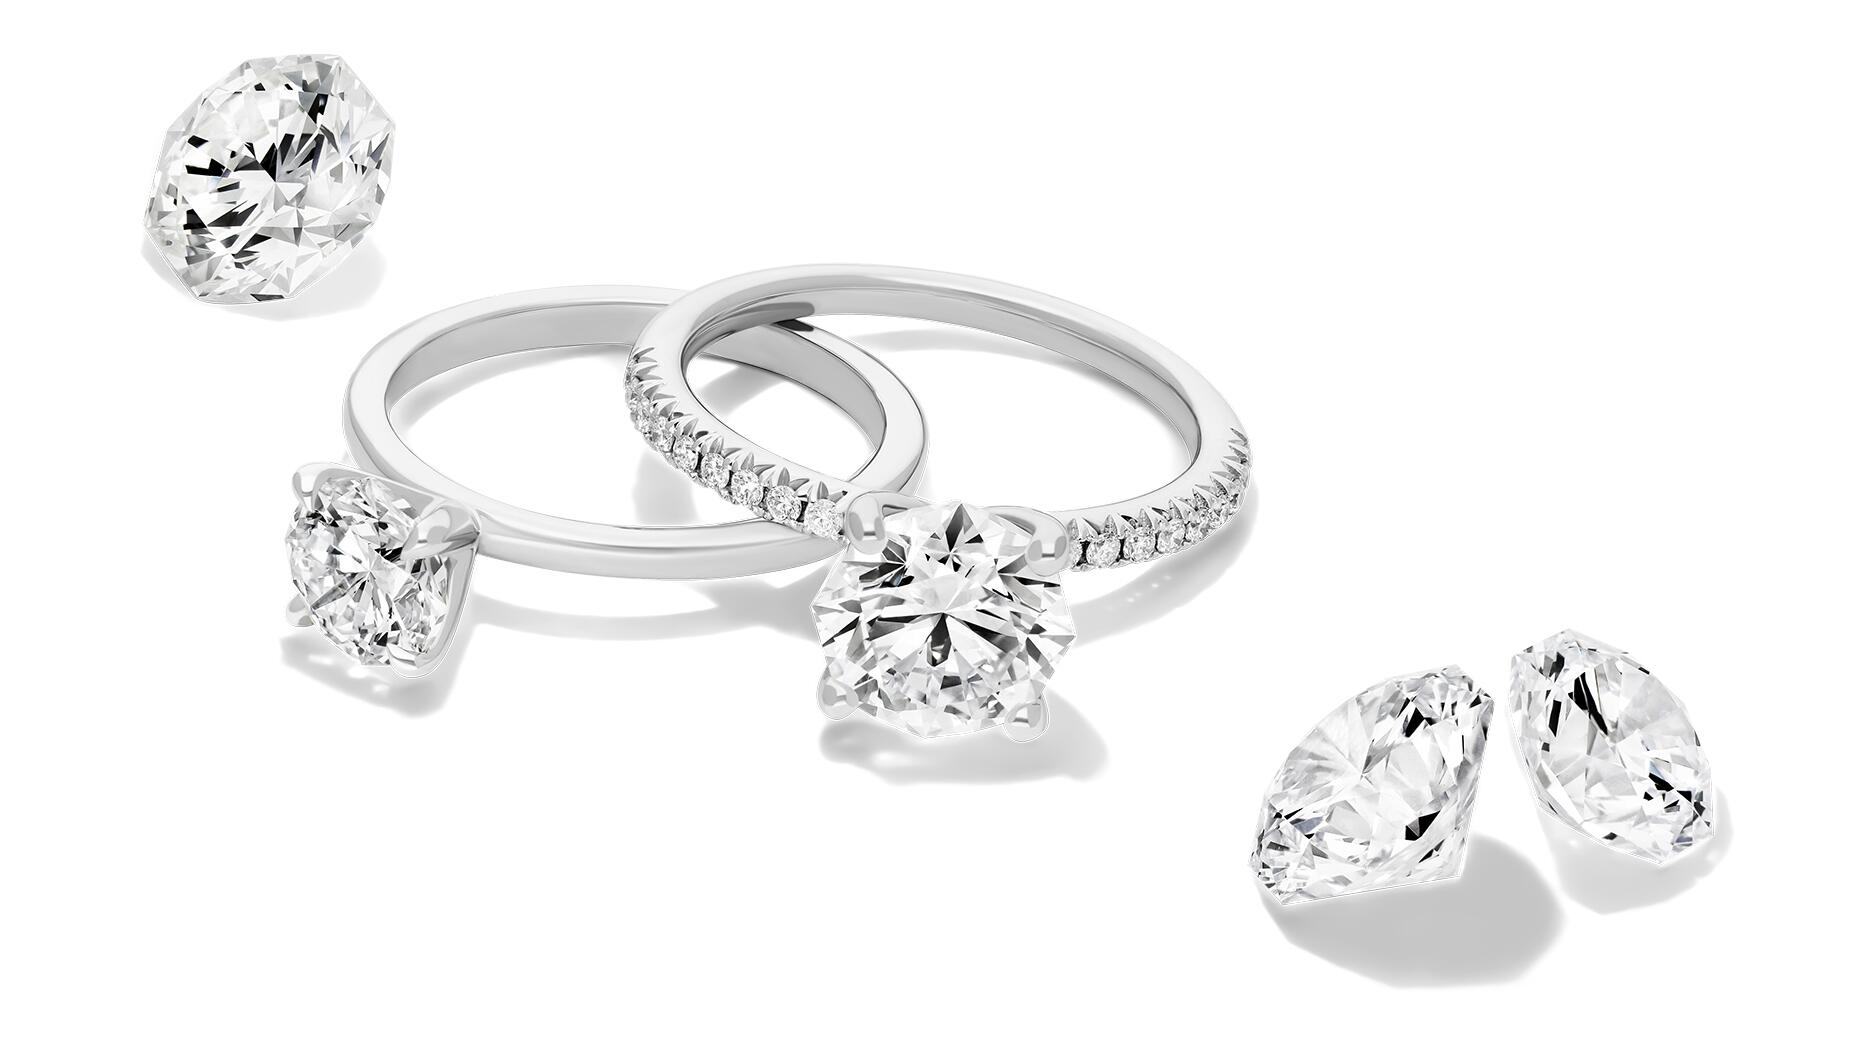 James Allen octagonal cut diamond engagement rings